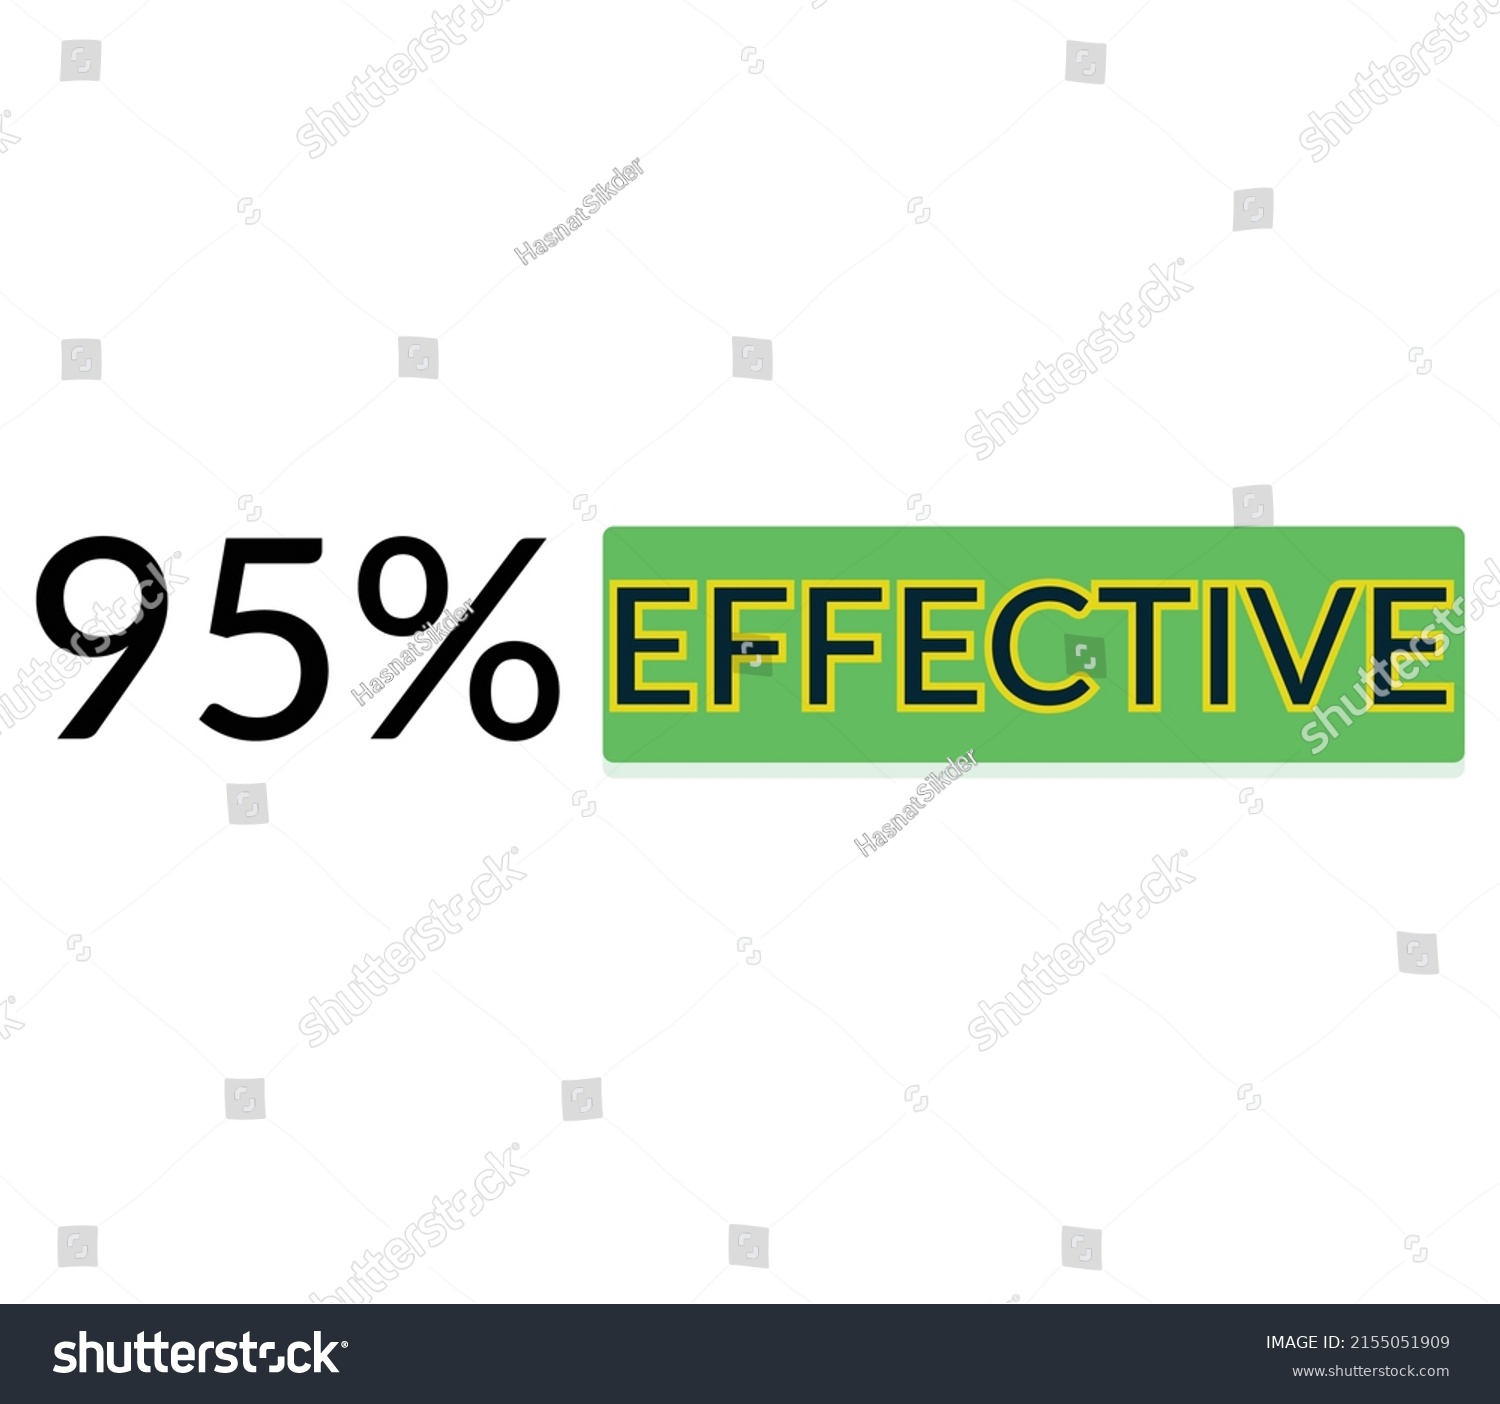 95% percentage effective sign label vector art illustration with fantastic font and green color #2155051909